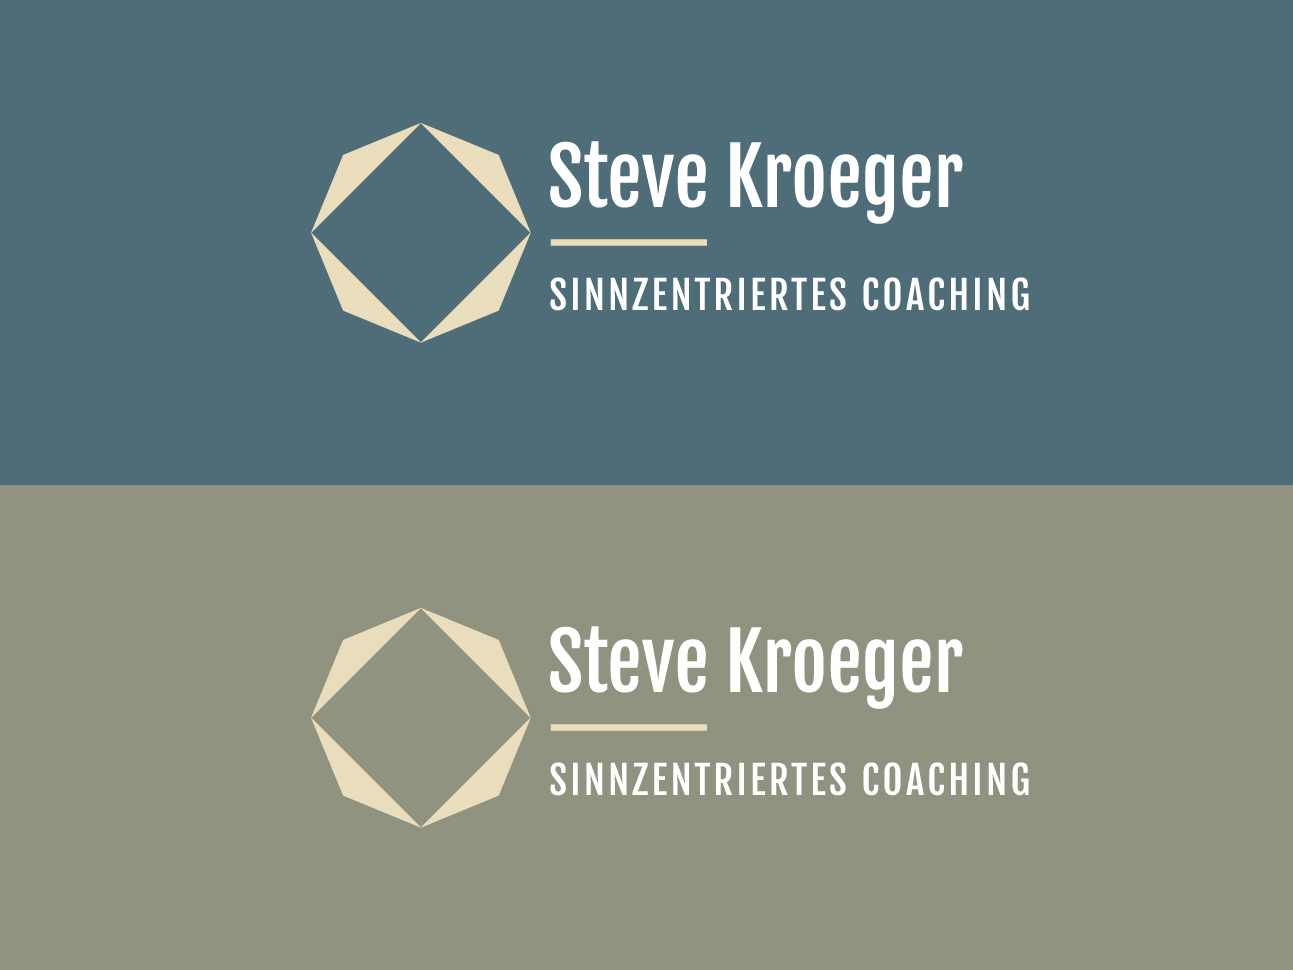 martin zech design, corporate design, steve kroeger coaching, logo, negativ